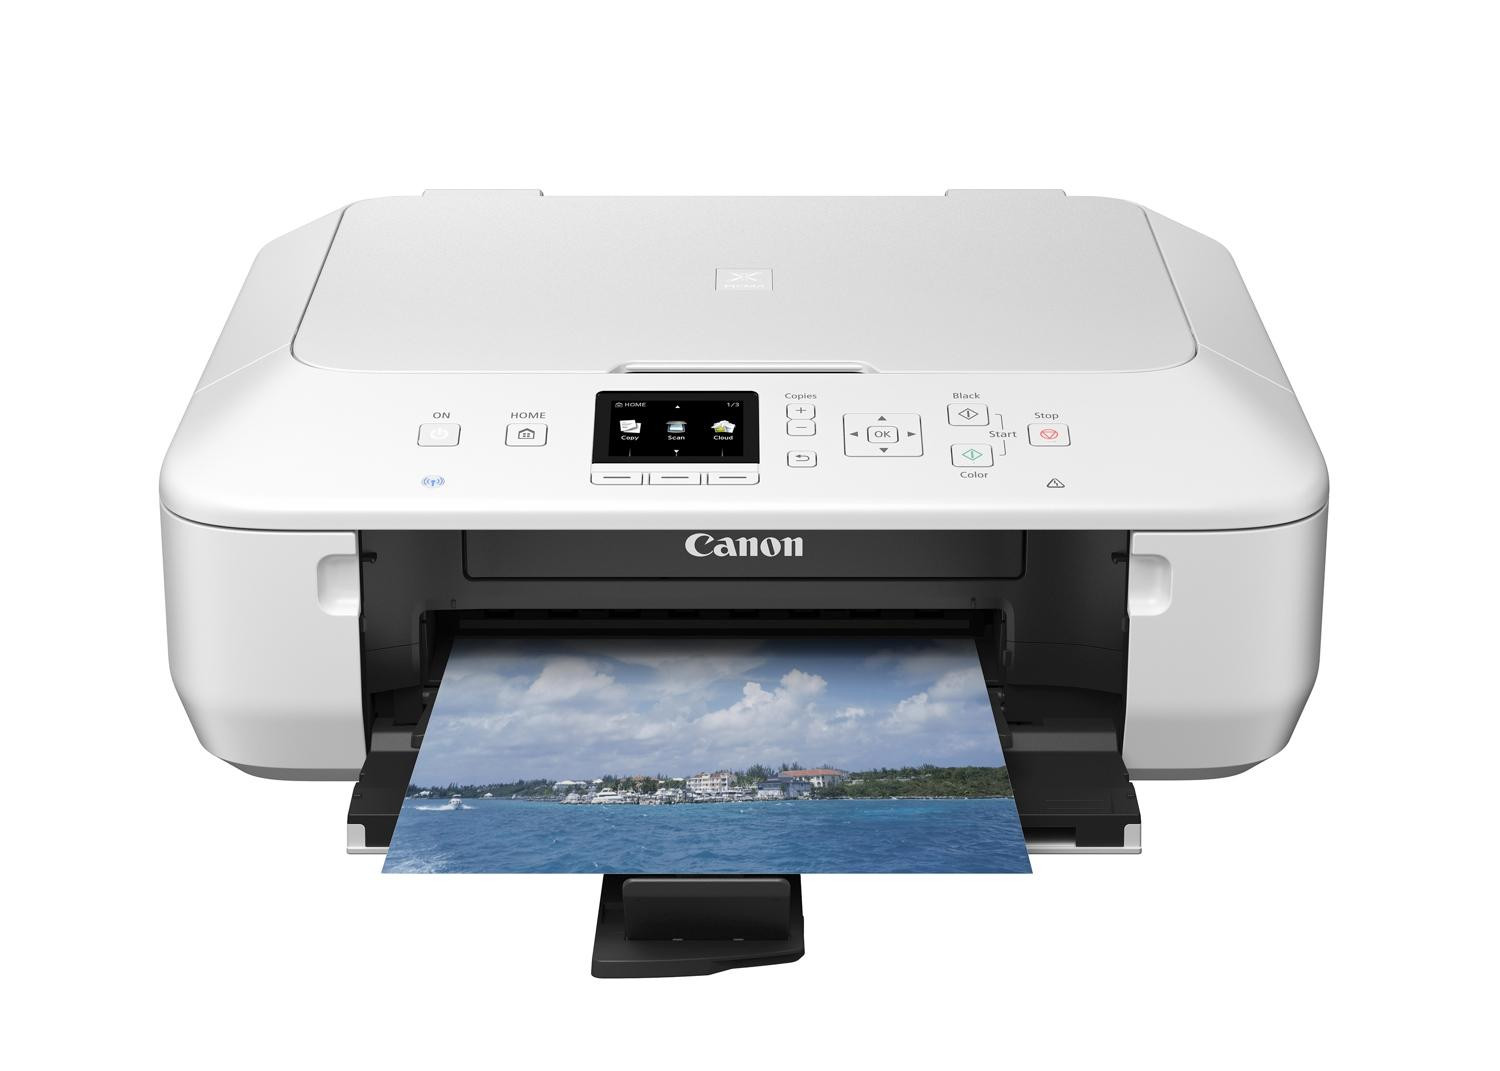 canon printer software free download